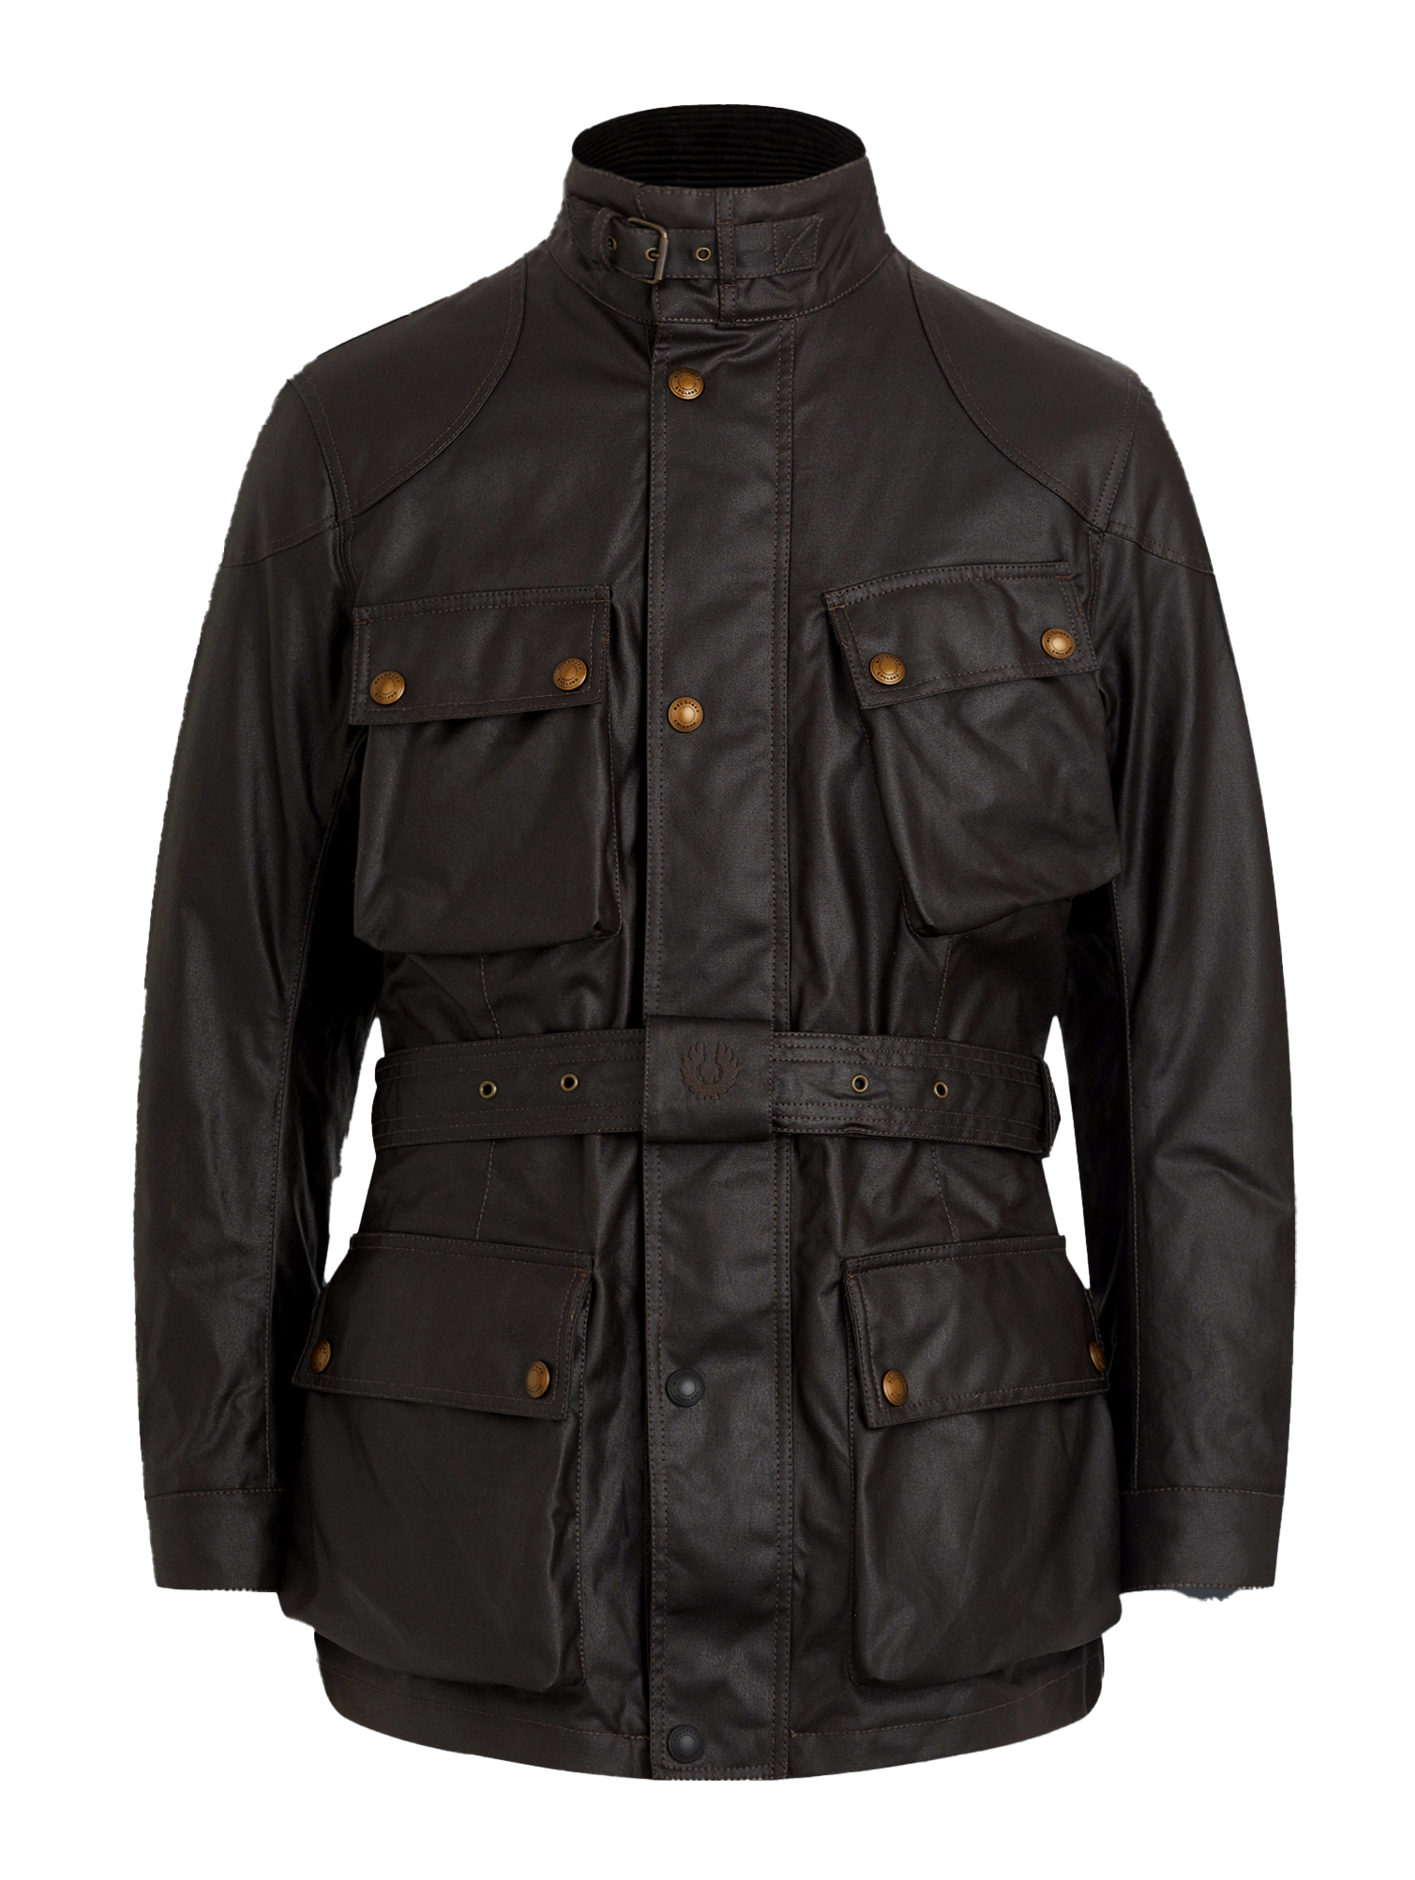 Belstaff Trialmaster motorcycle jacket in Mahogany, £650